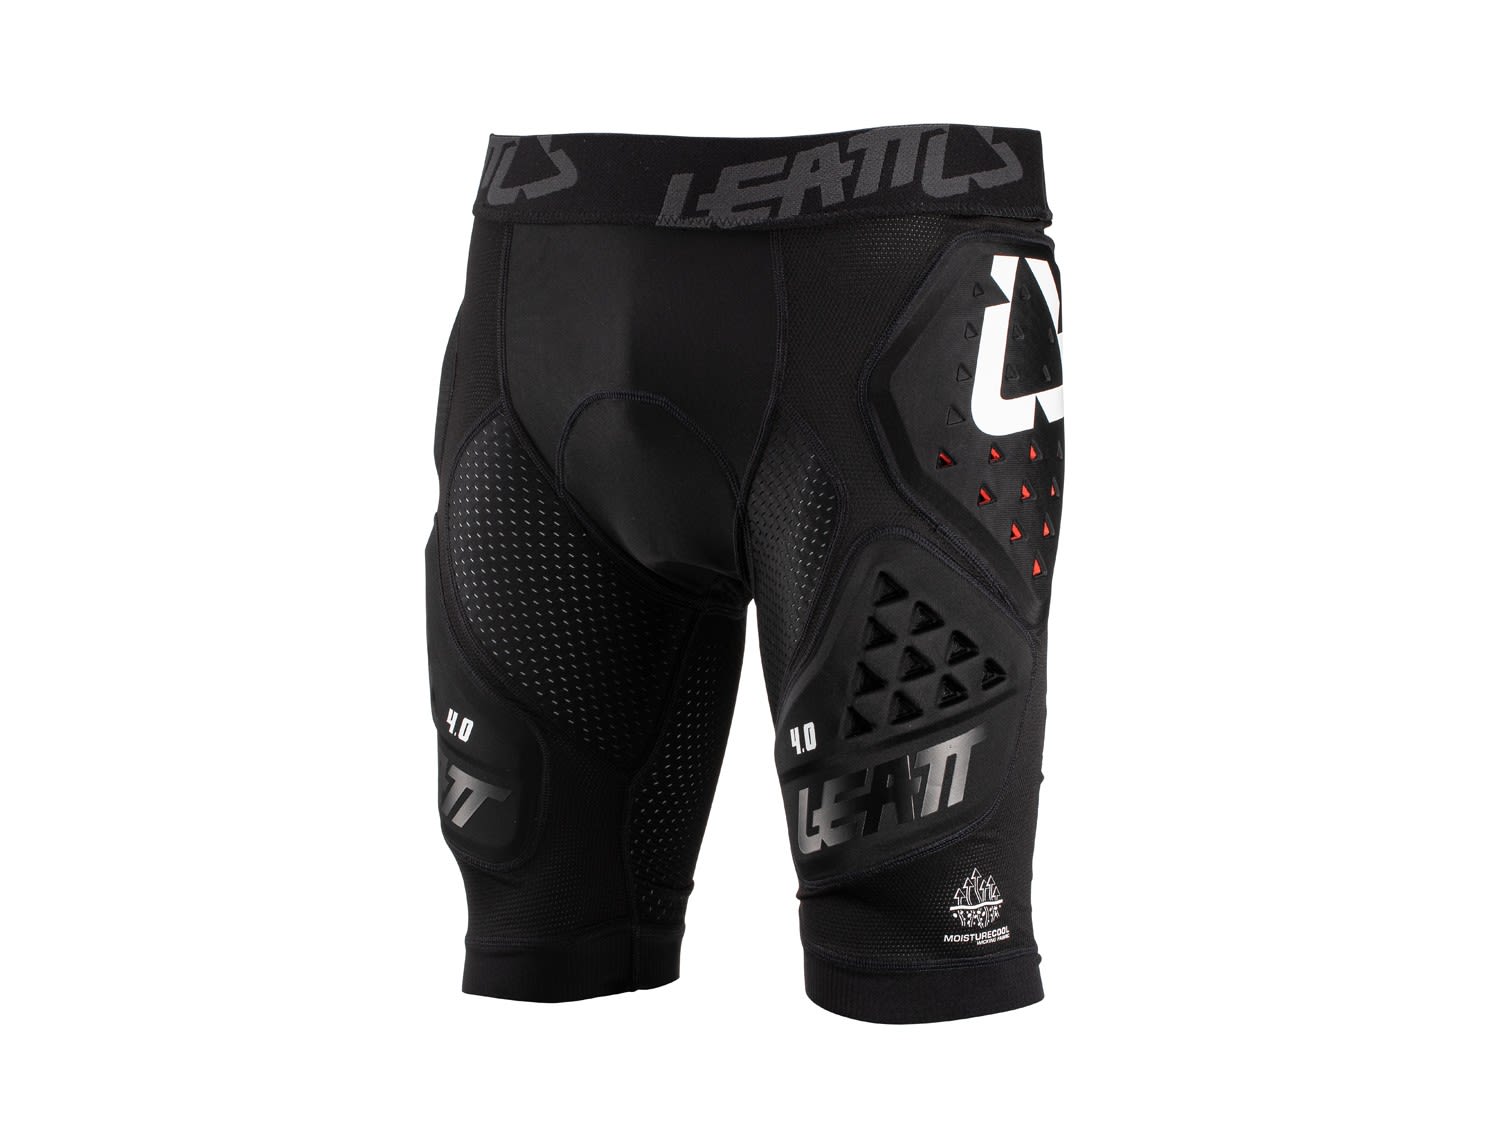 Leatt DBX 4-0 3DF Impact Shorts Incl- Chamois Schwarz- Male Protektorenhosen- Grsse S - Farbe Black